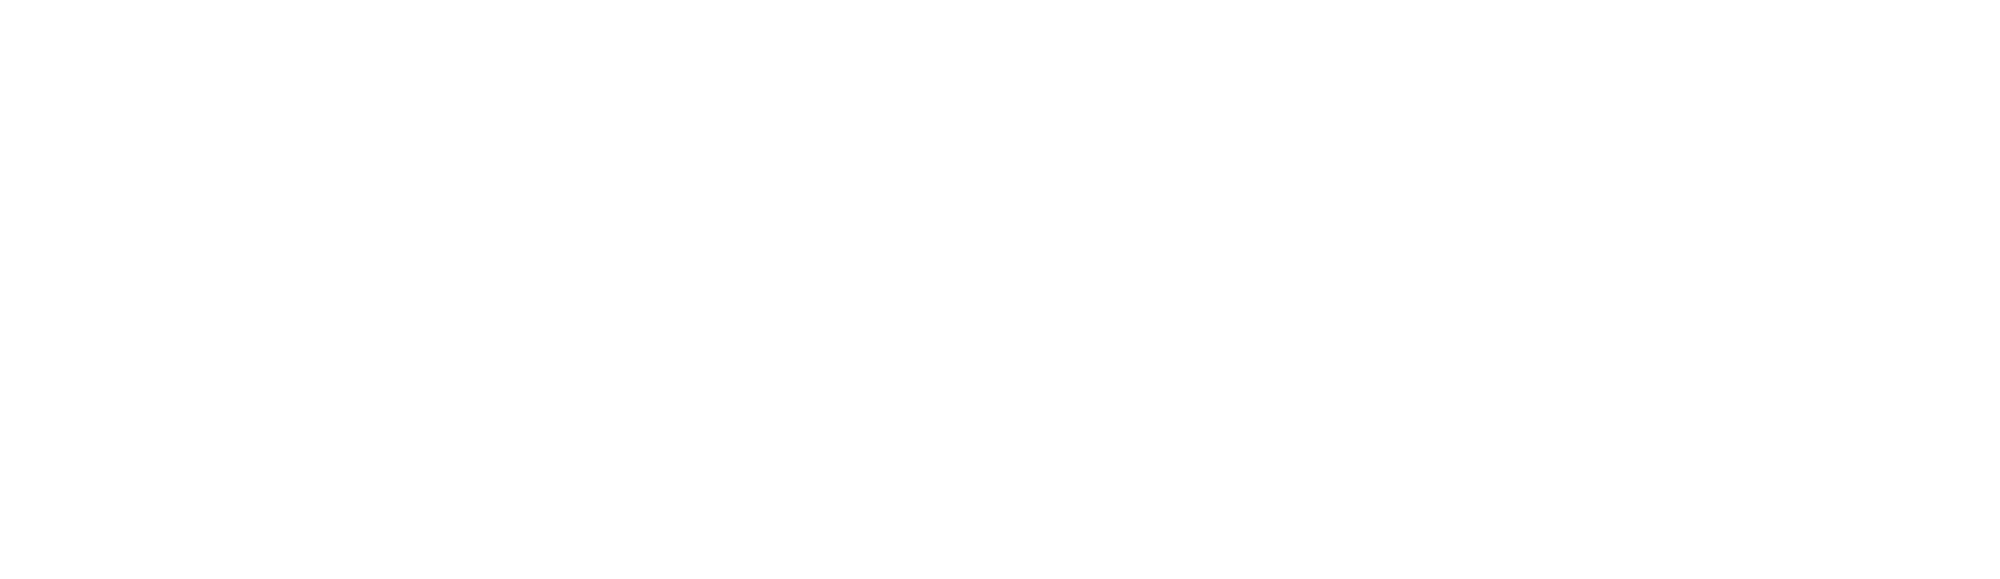 Fantasy Final Logo Free Transparent Image HQ PNG Image